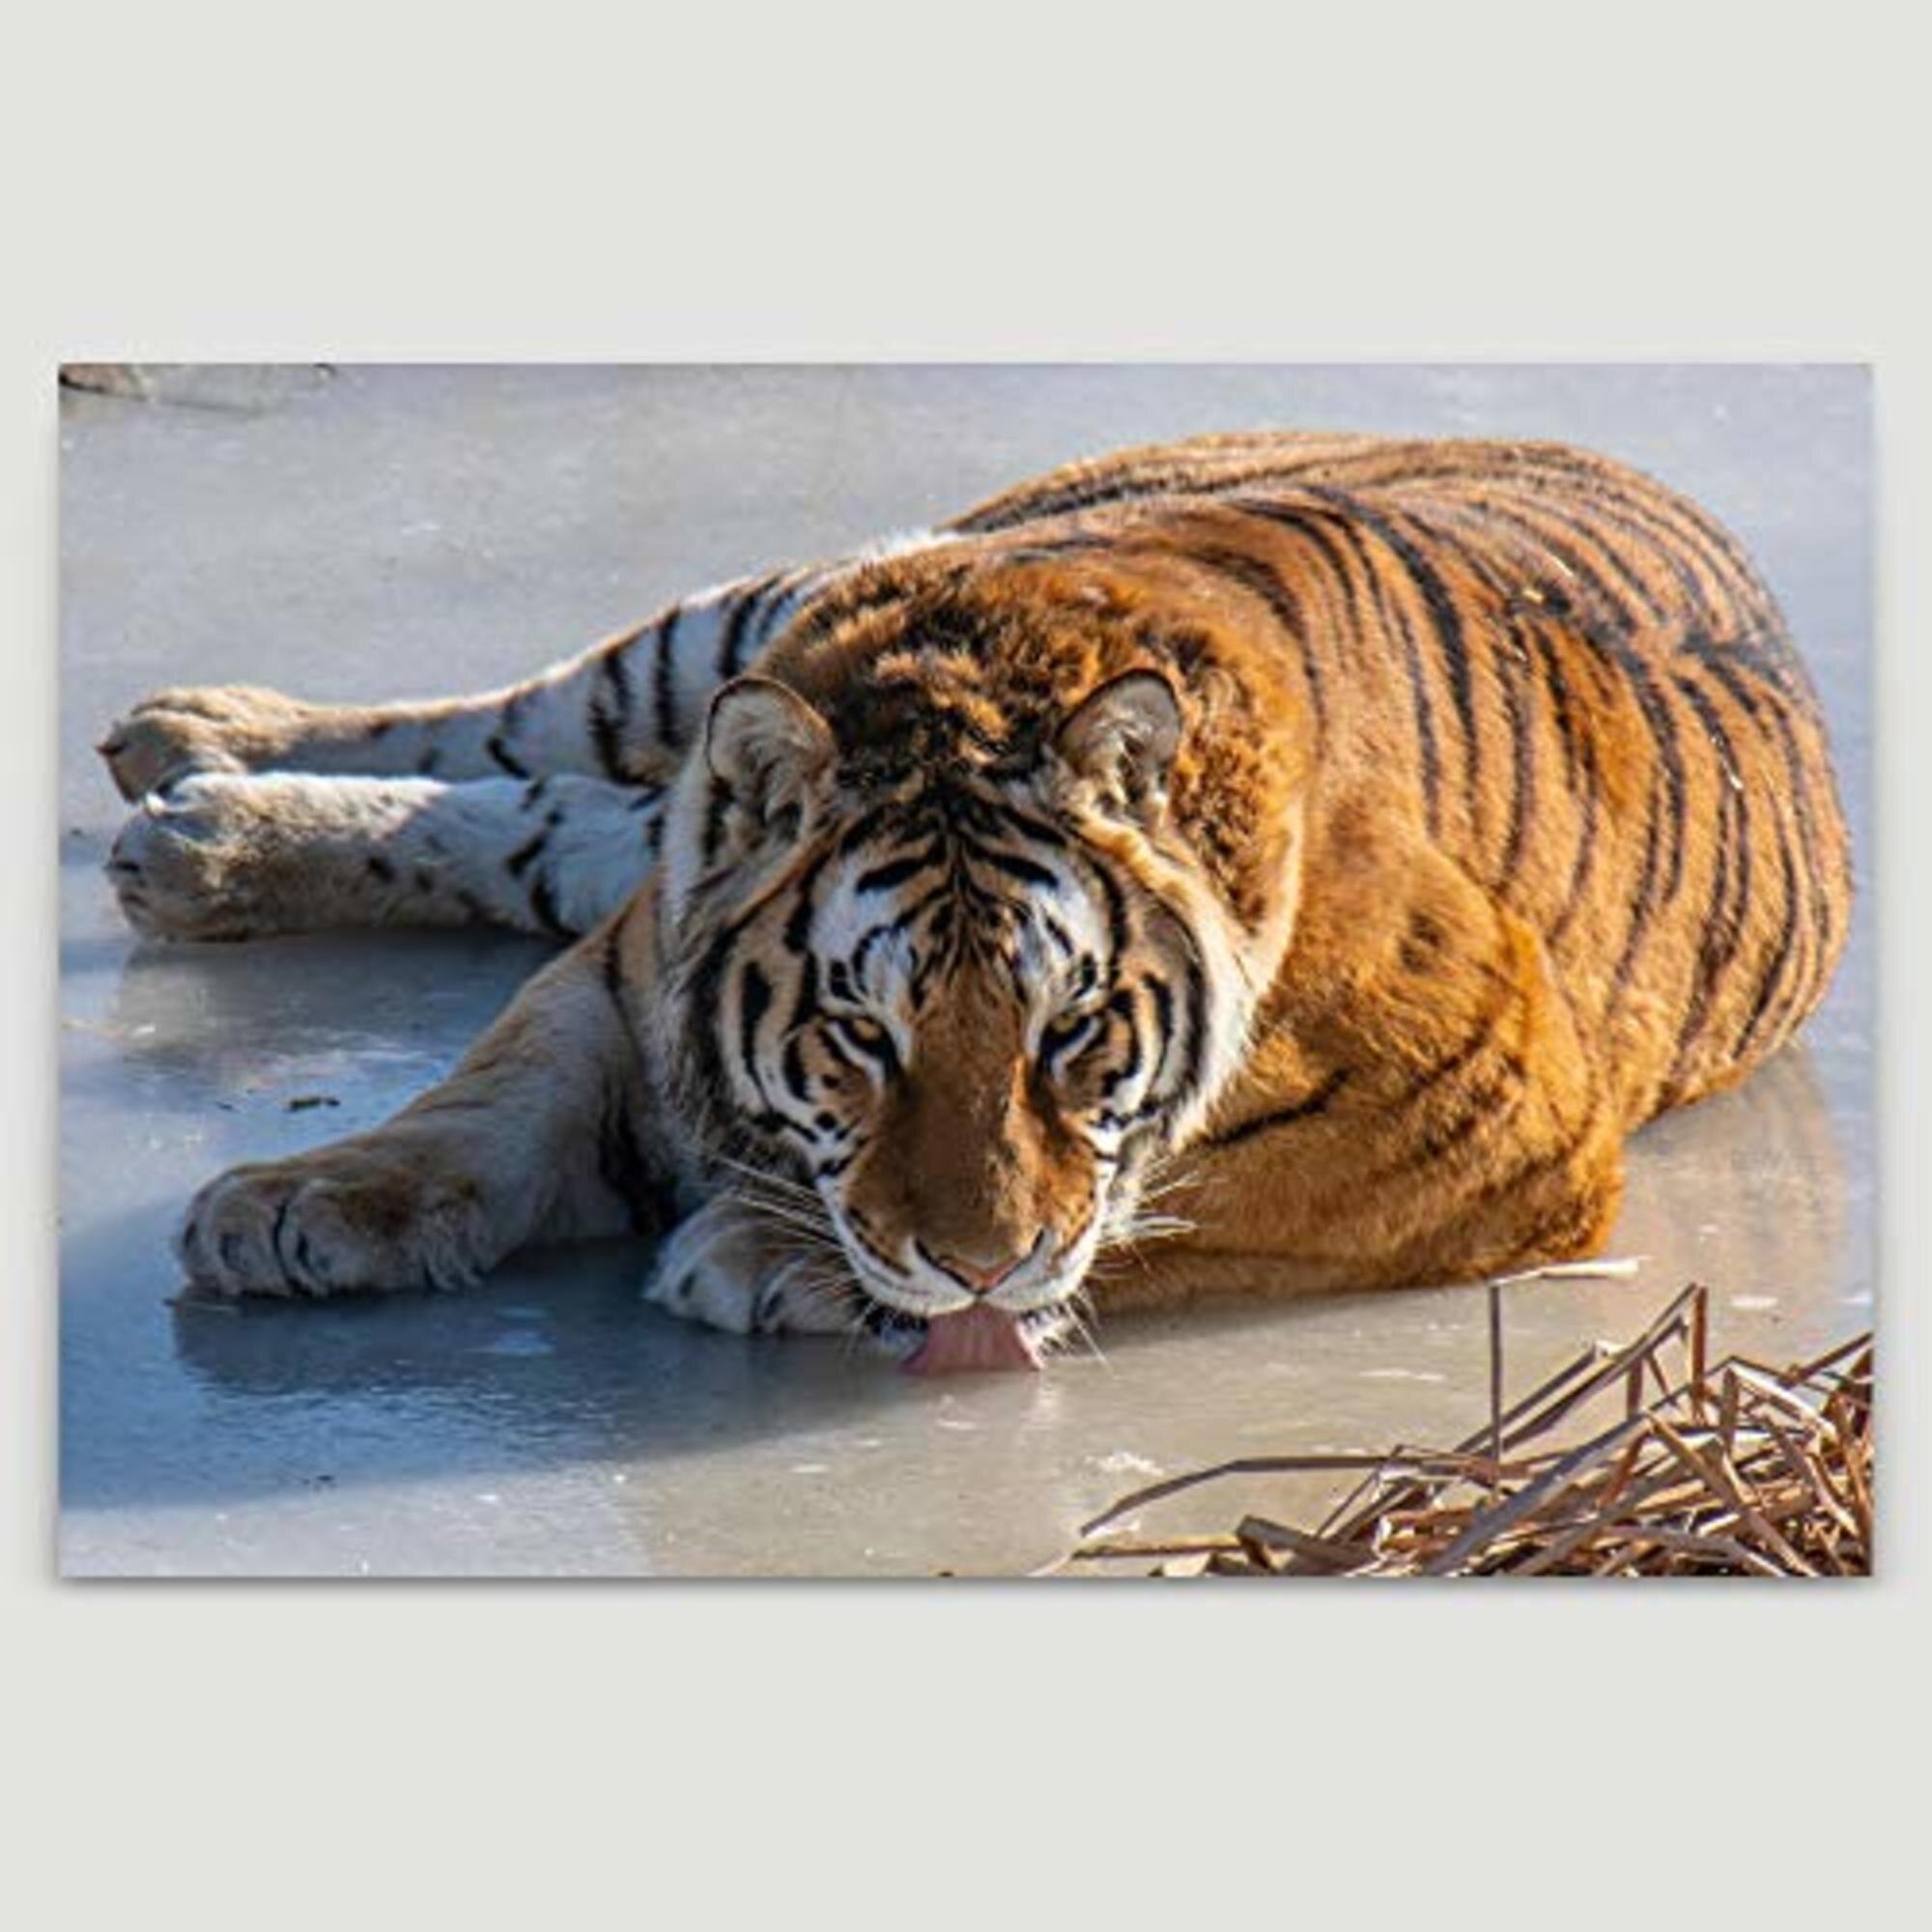 Lampshades Ideal To Match Tiger Wallpaper Tiger Cushions Tiger Duvets & Wall Art 